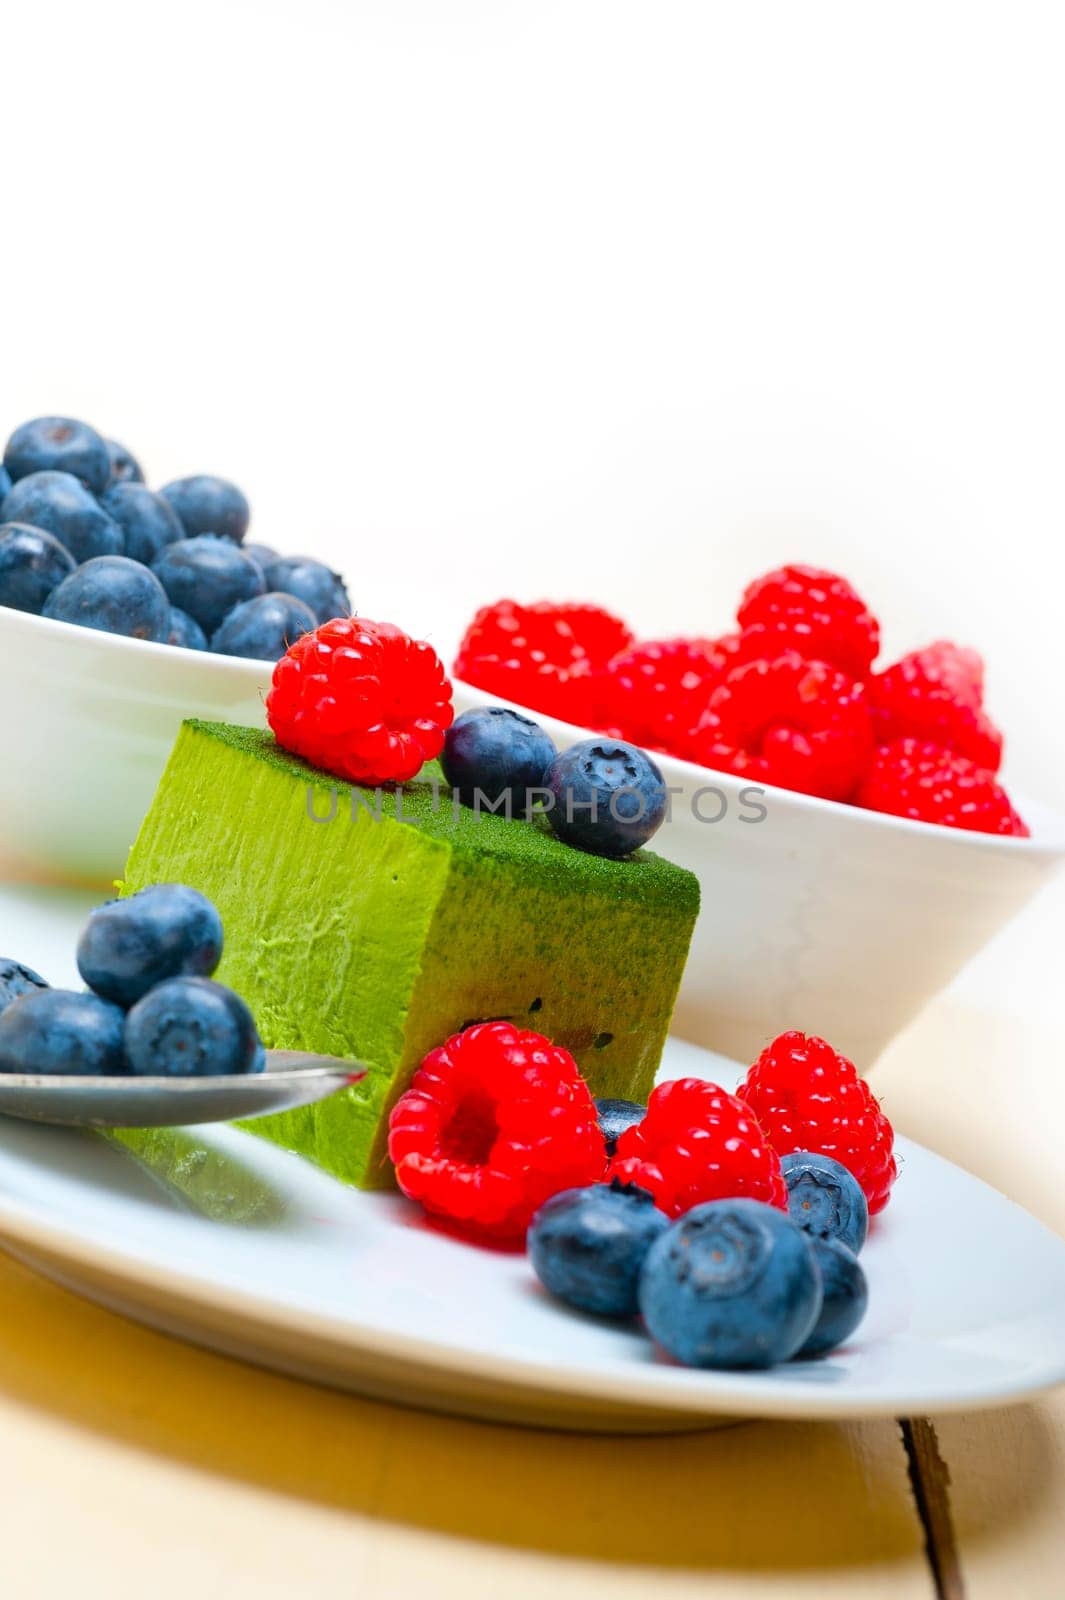 green tea matcha mousse cake with berries by keko64